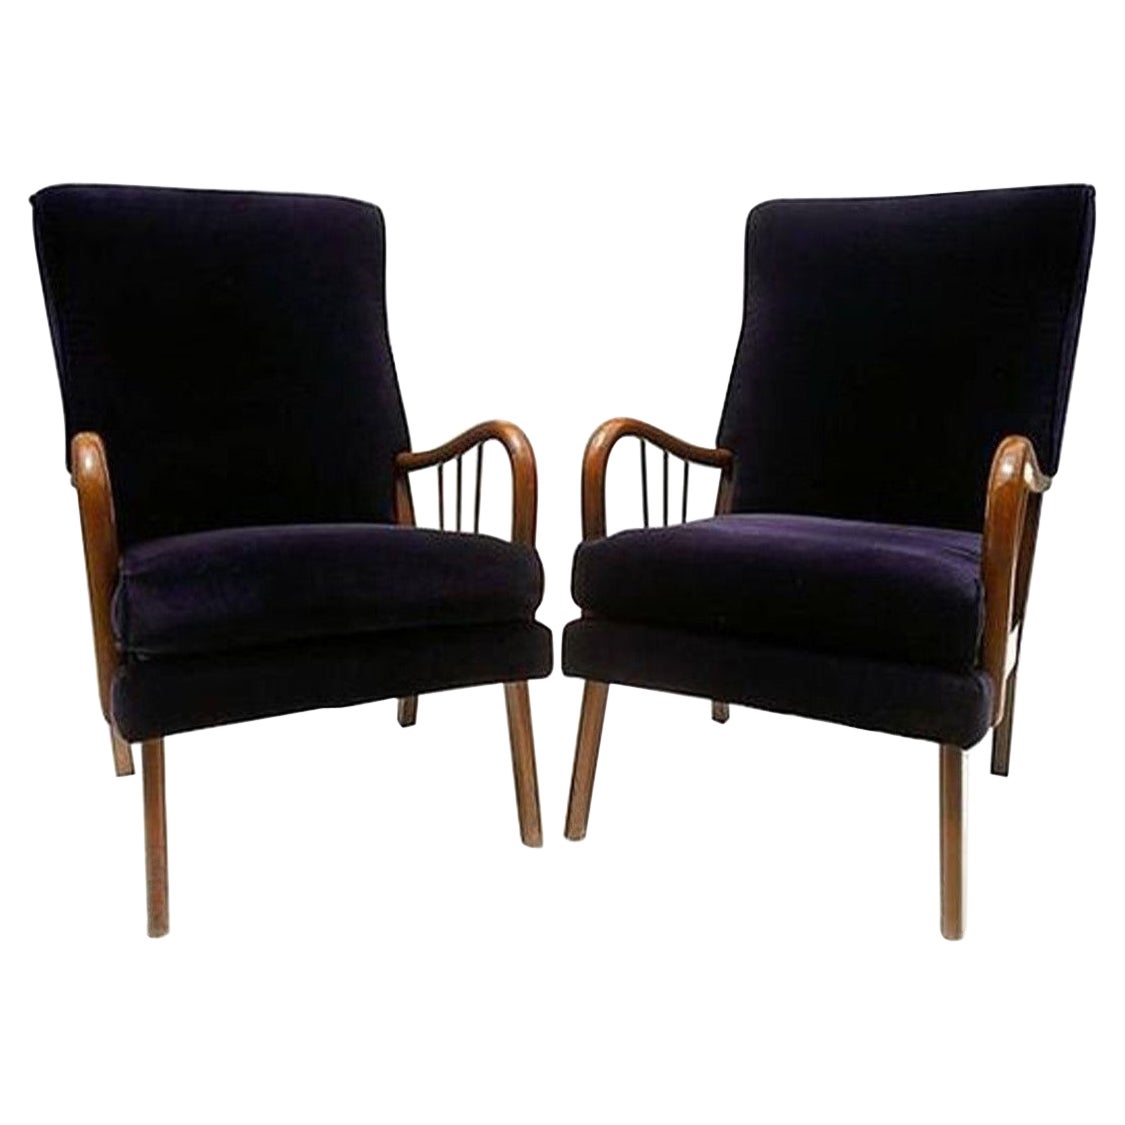 1950's Paolo Buffa Style Midcentury Italian Lounge Chairs